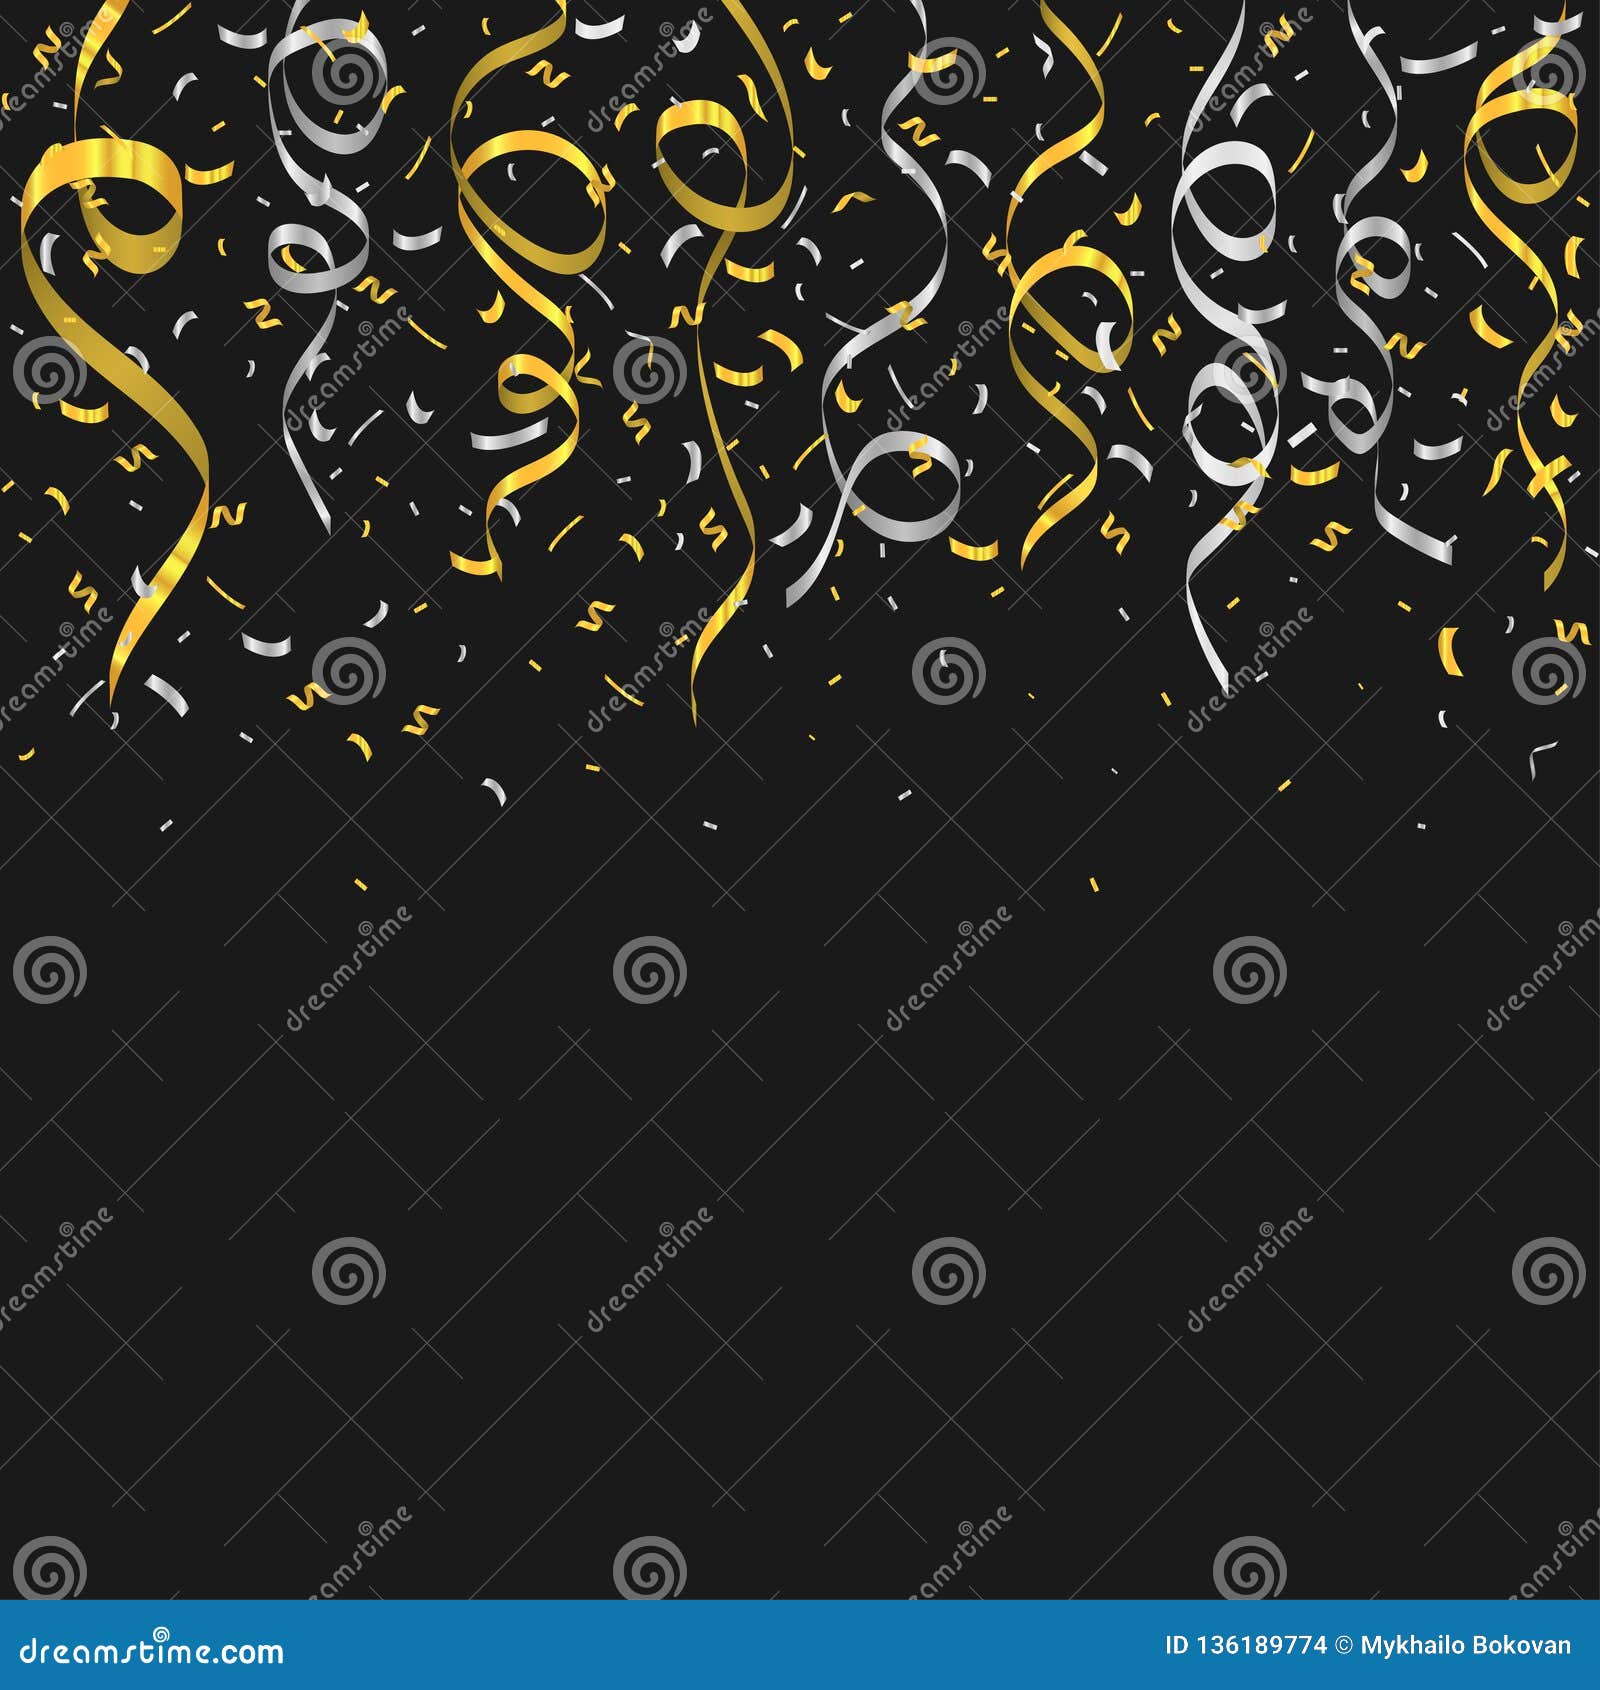 Golden and silver confetti stock vector. Illustration of design - 136189774